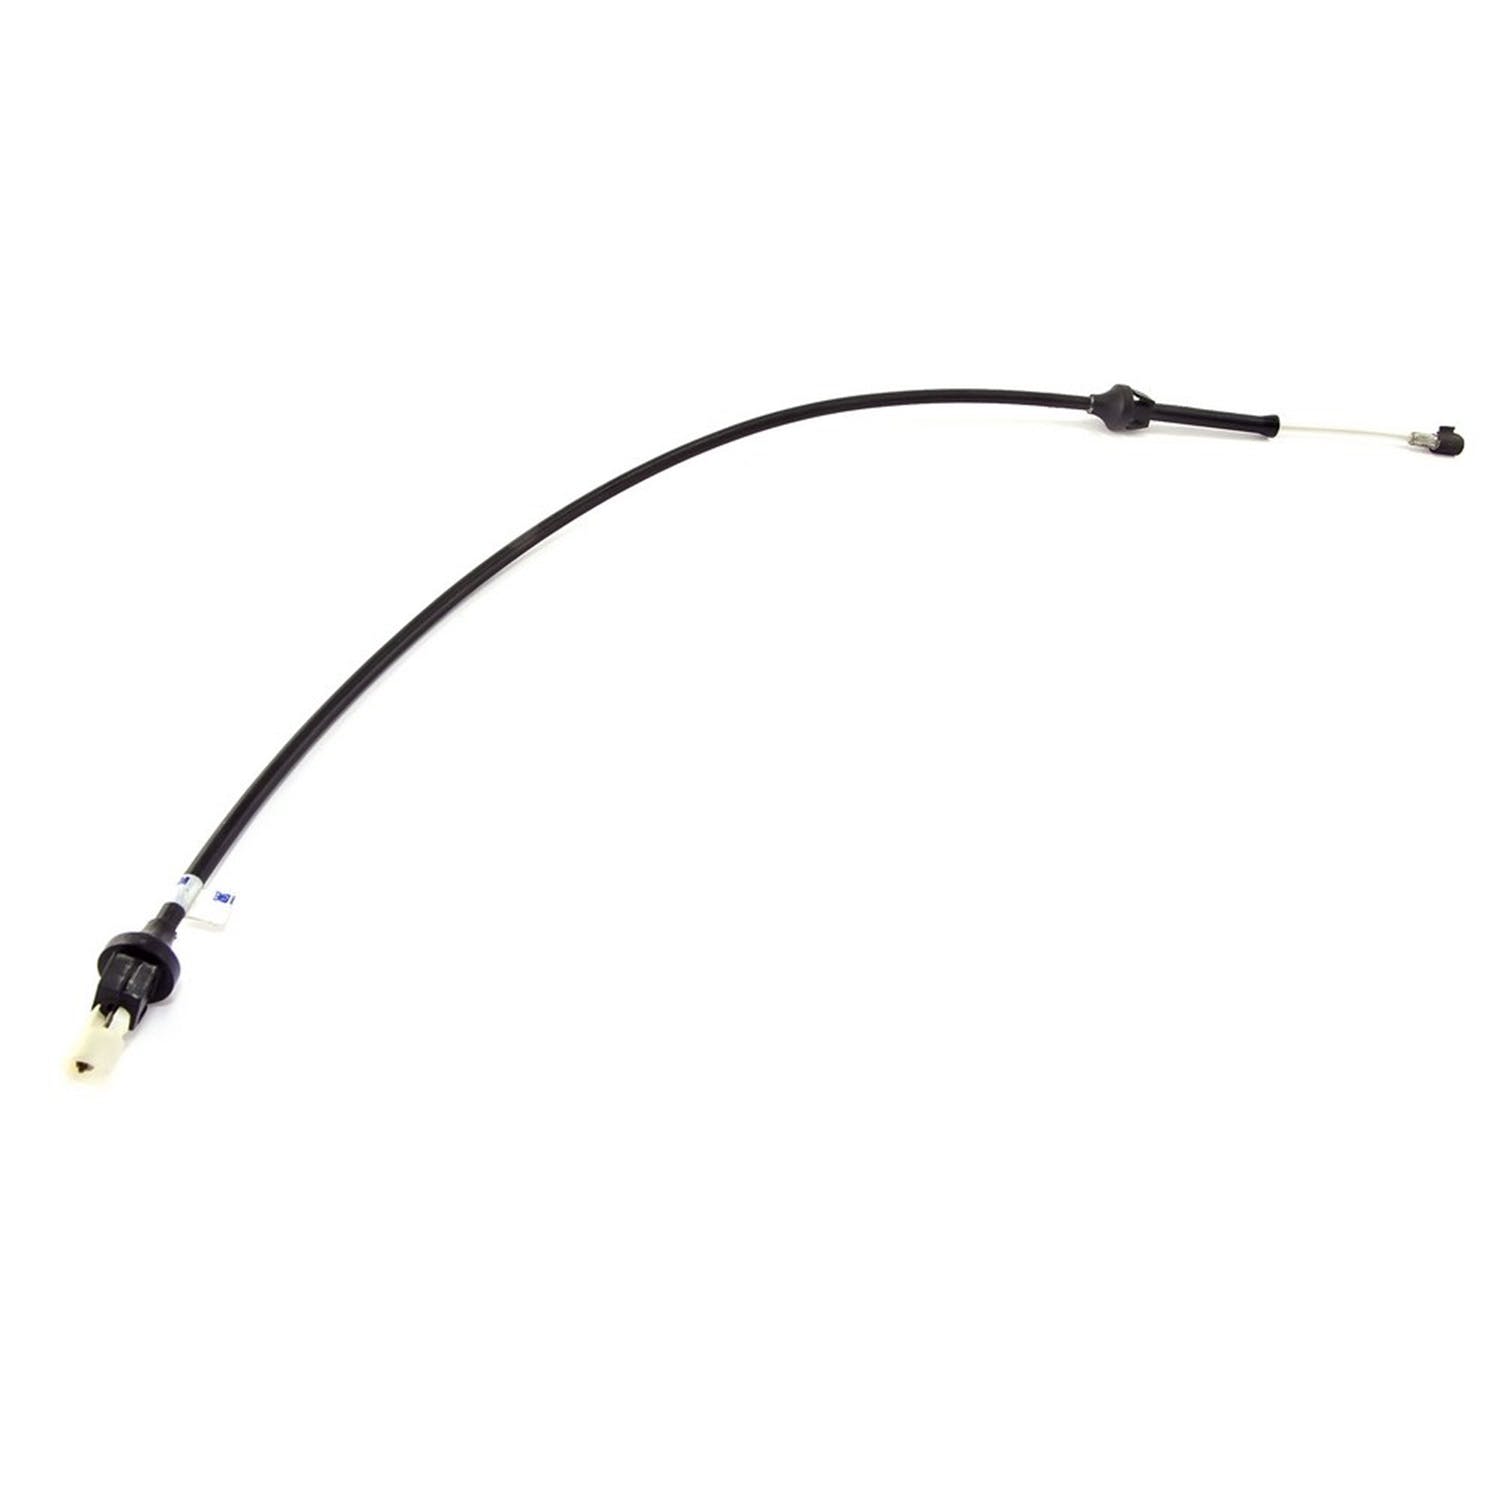 Omix-ADA 17716.03 Accelerator Cable